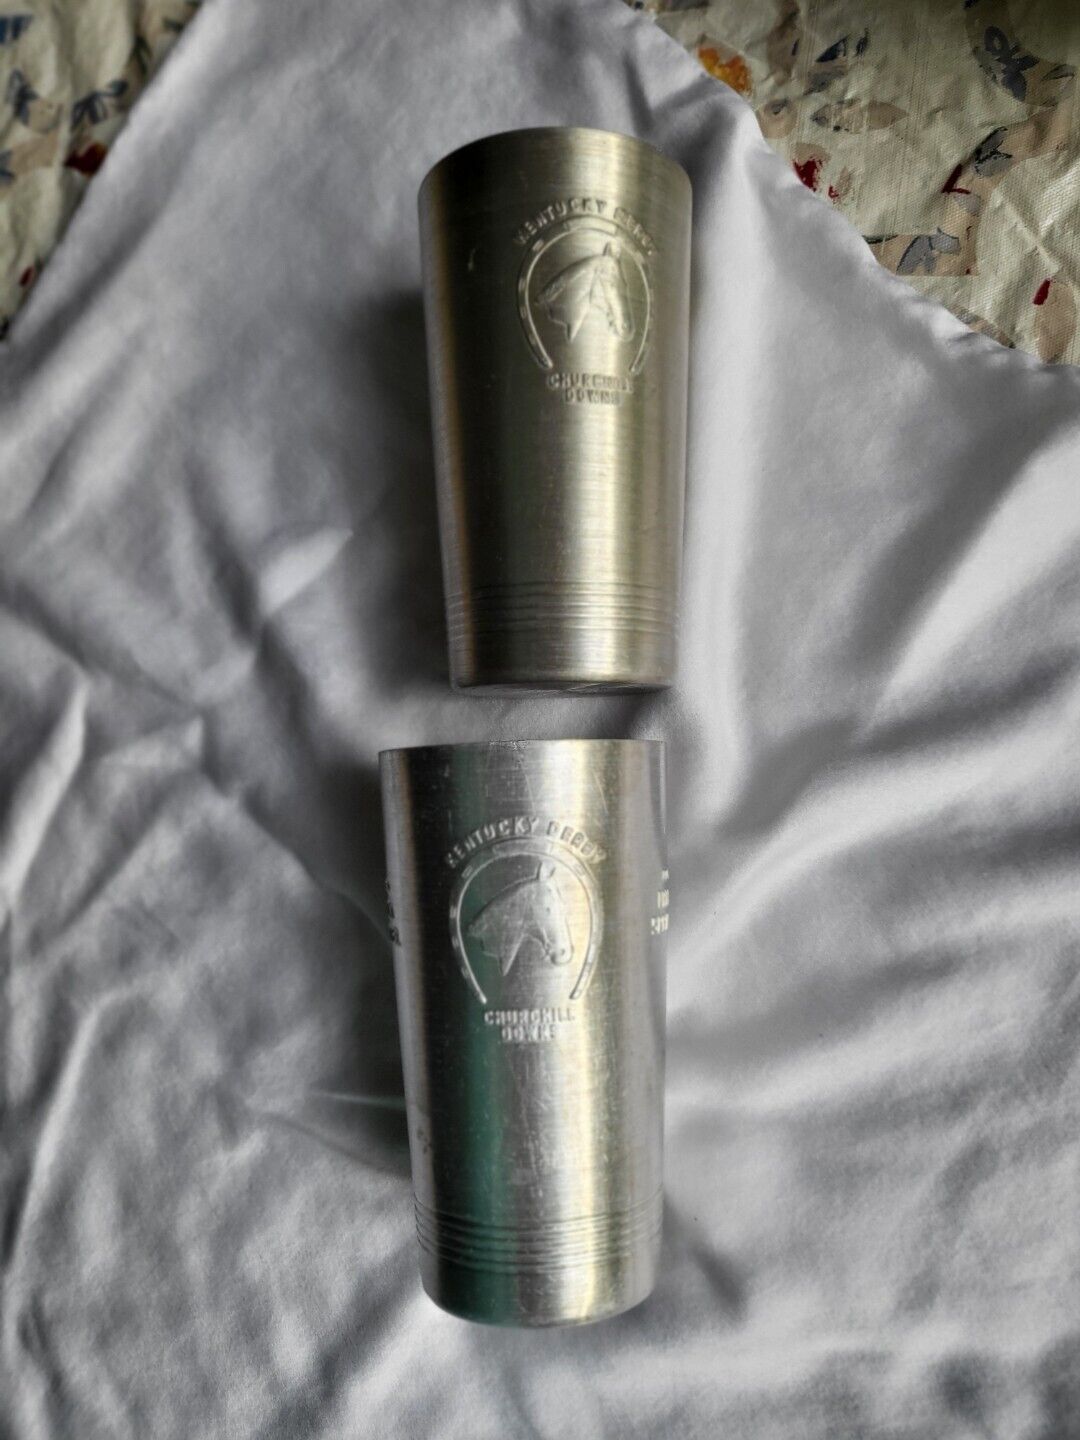 Both 1940 Aluminum Cup/glasses, Regular & French Lick